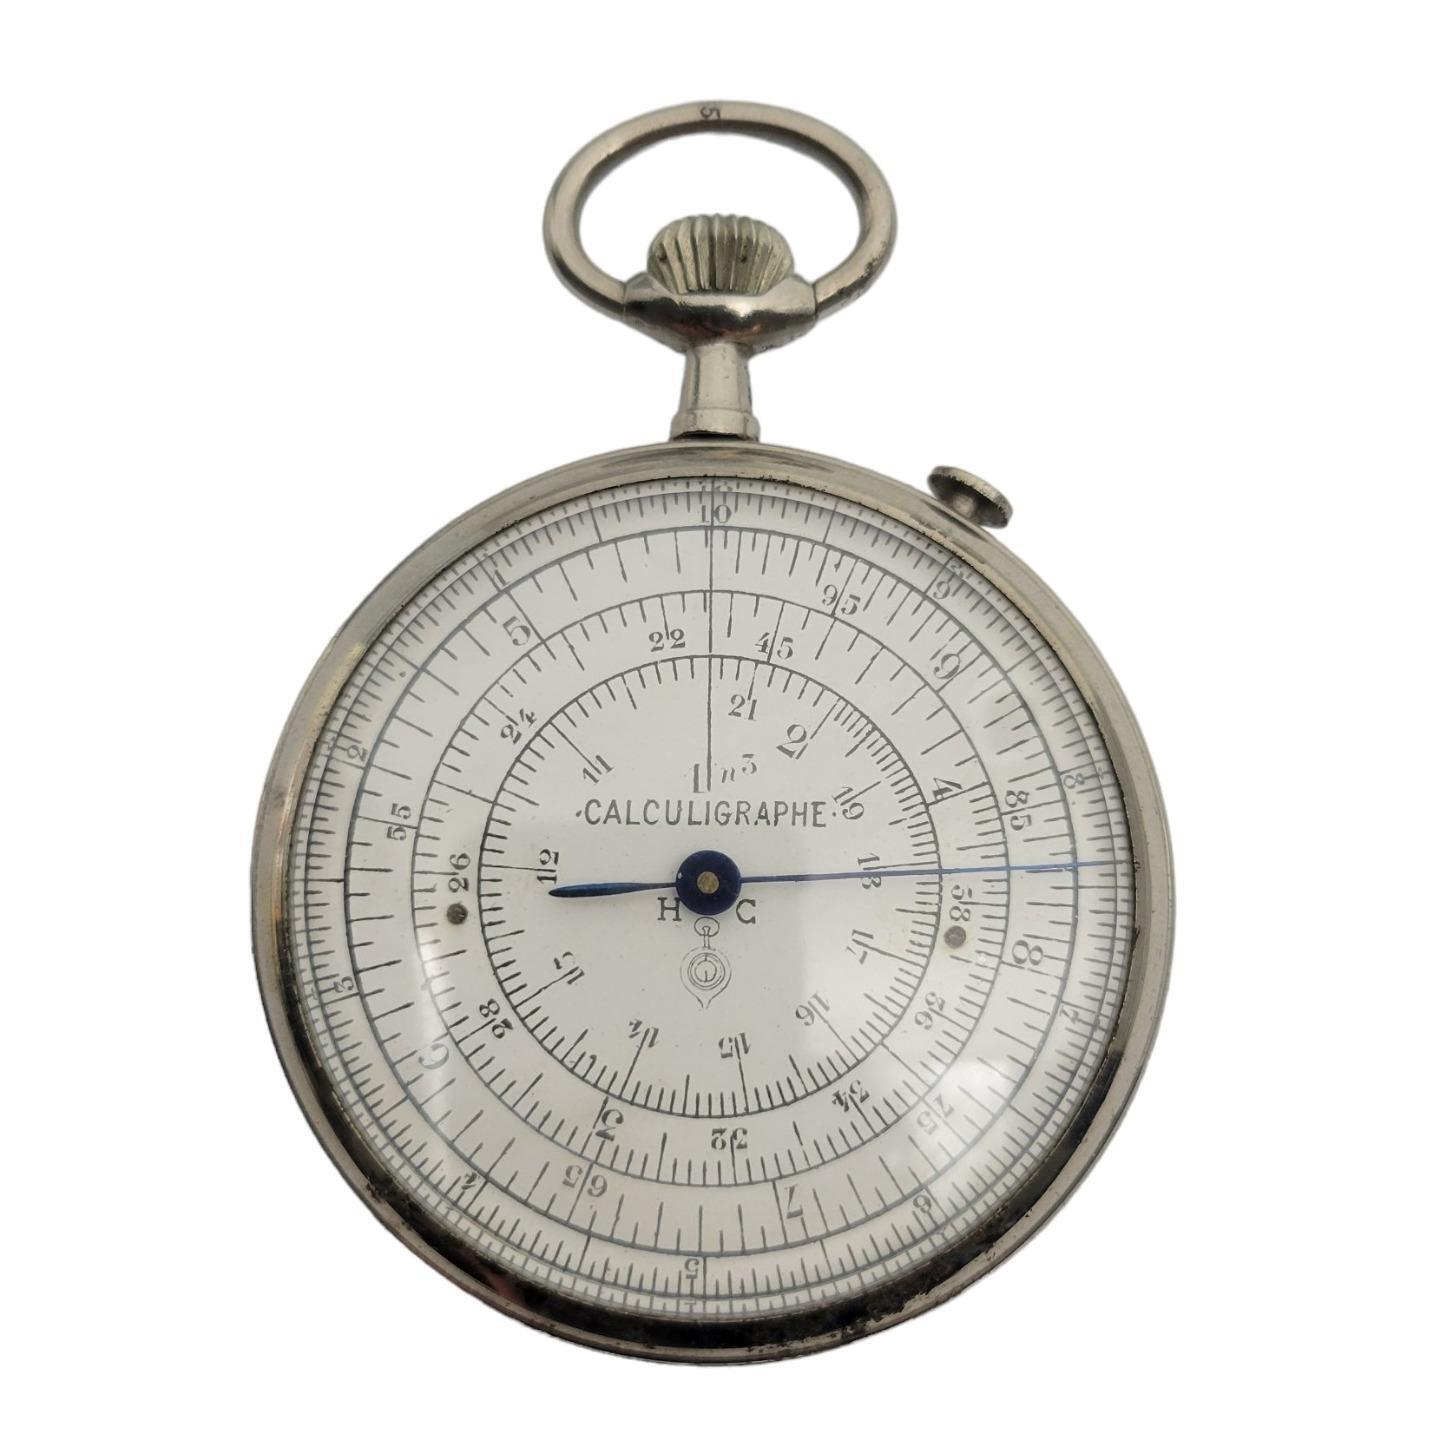 Antique Henri Chatelain Calculigraphe Circular Slide Rule - Pocket Watch Shape